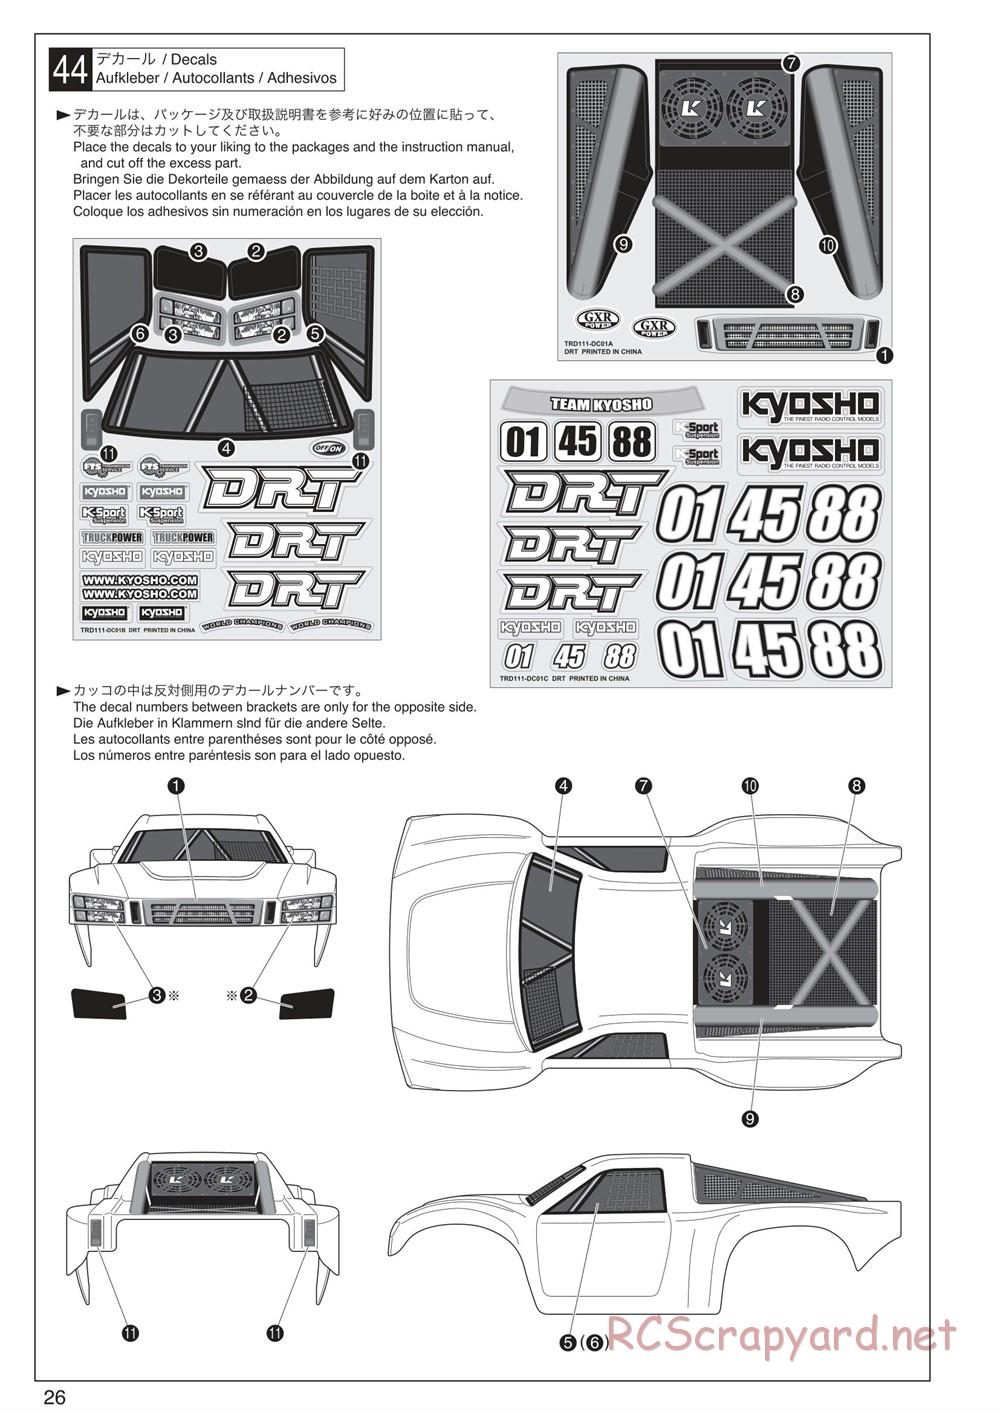 Kyosho - DRT - Manual - Page 26